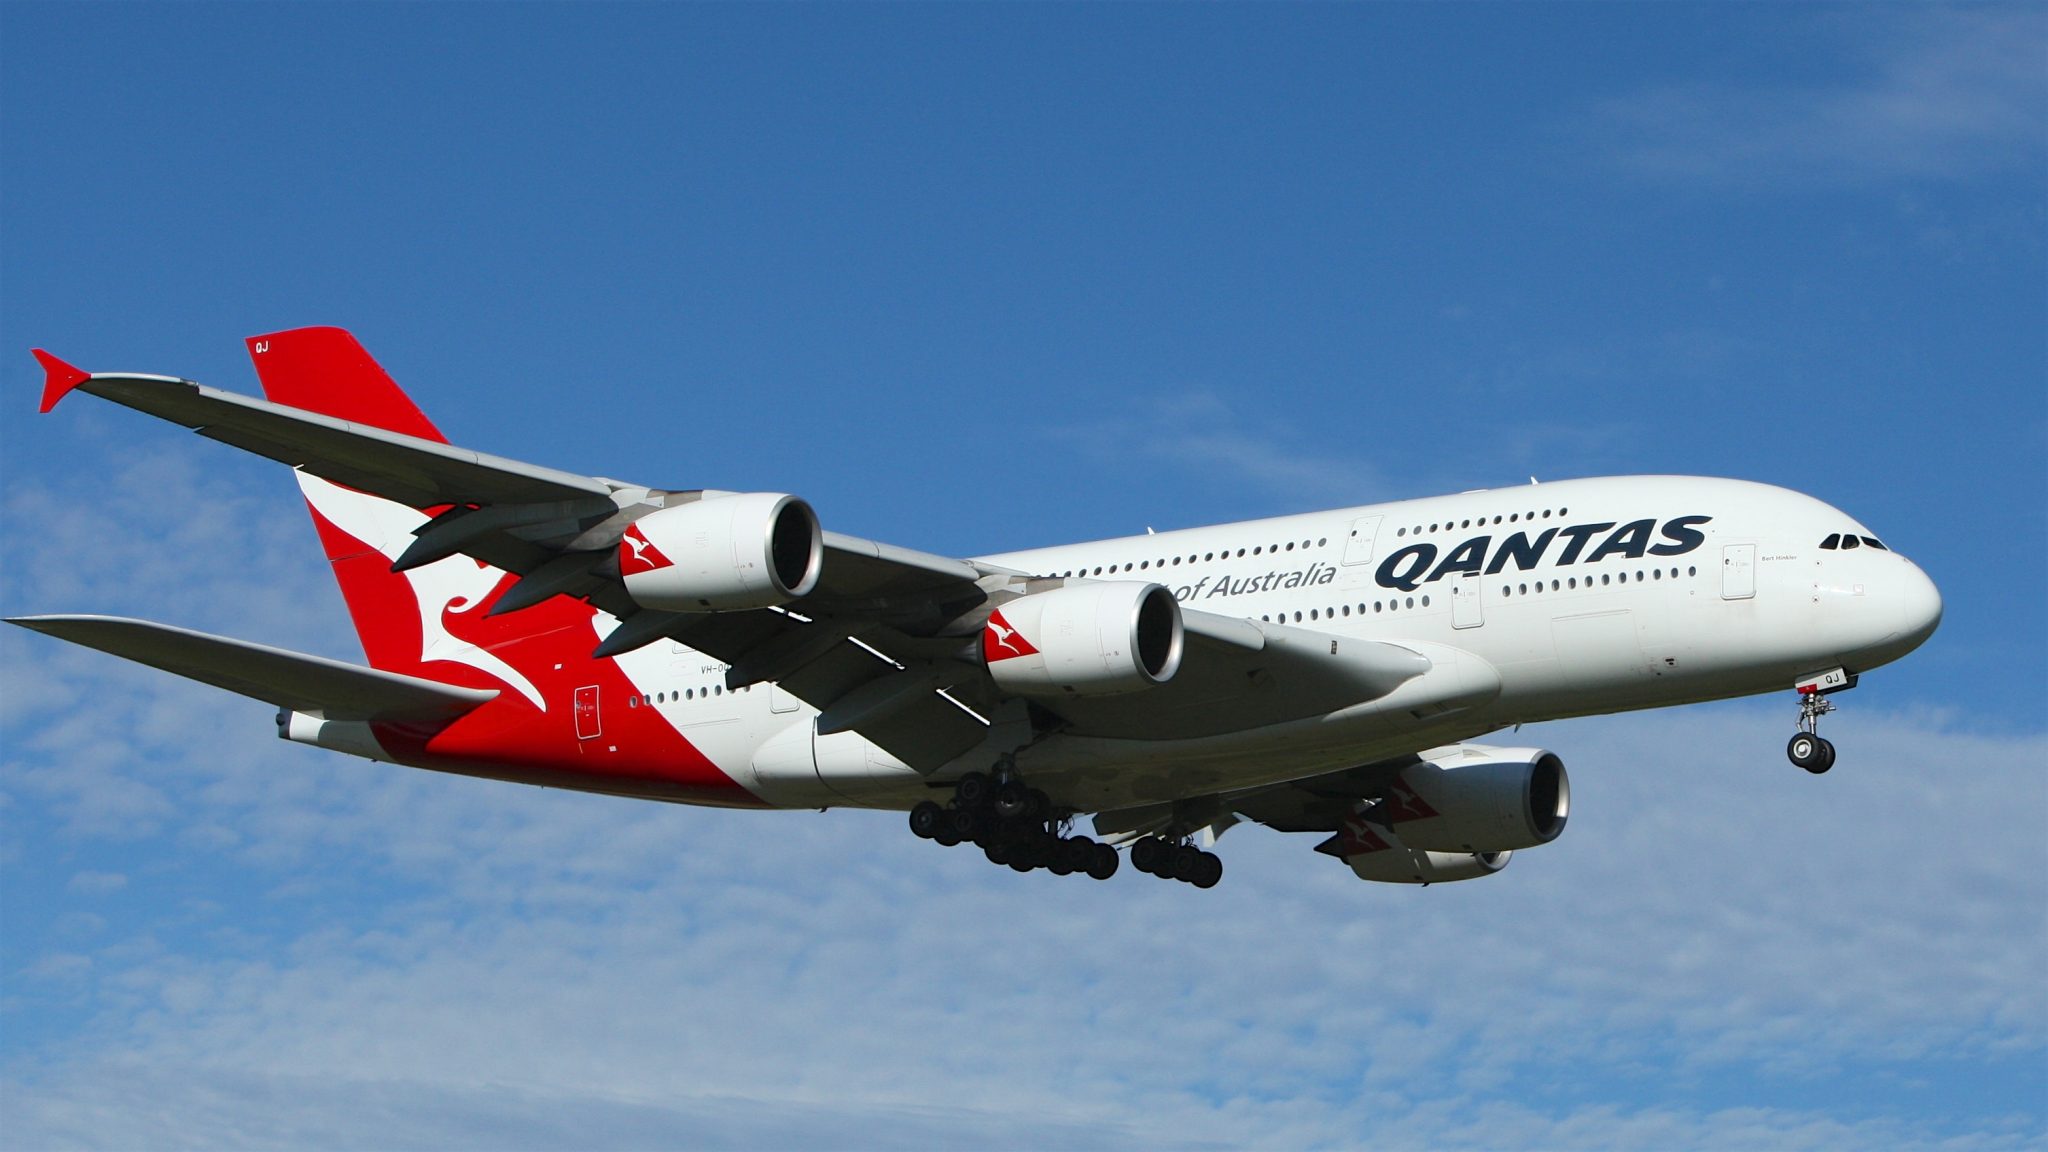 Busselton 1 of 9 Regional Contenders for New Qantas Flight Academy